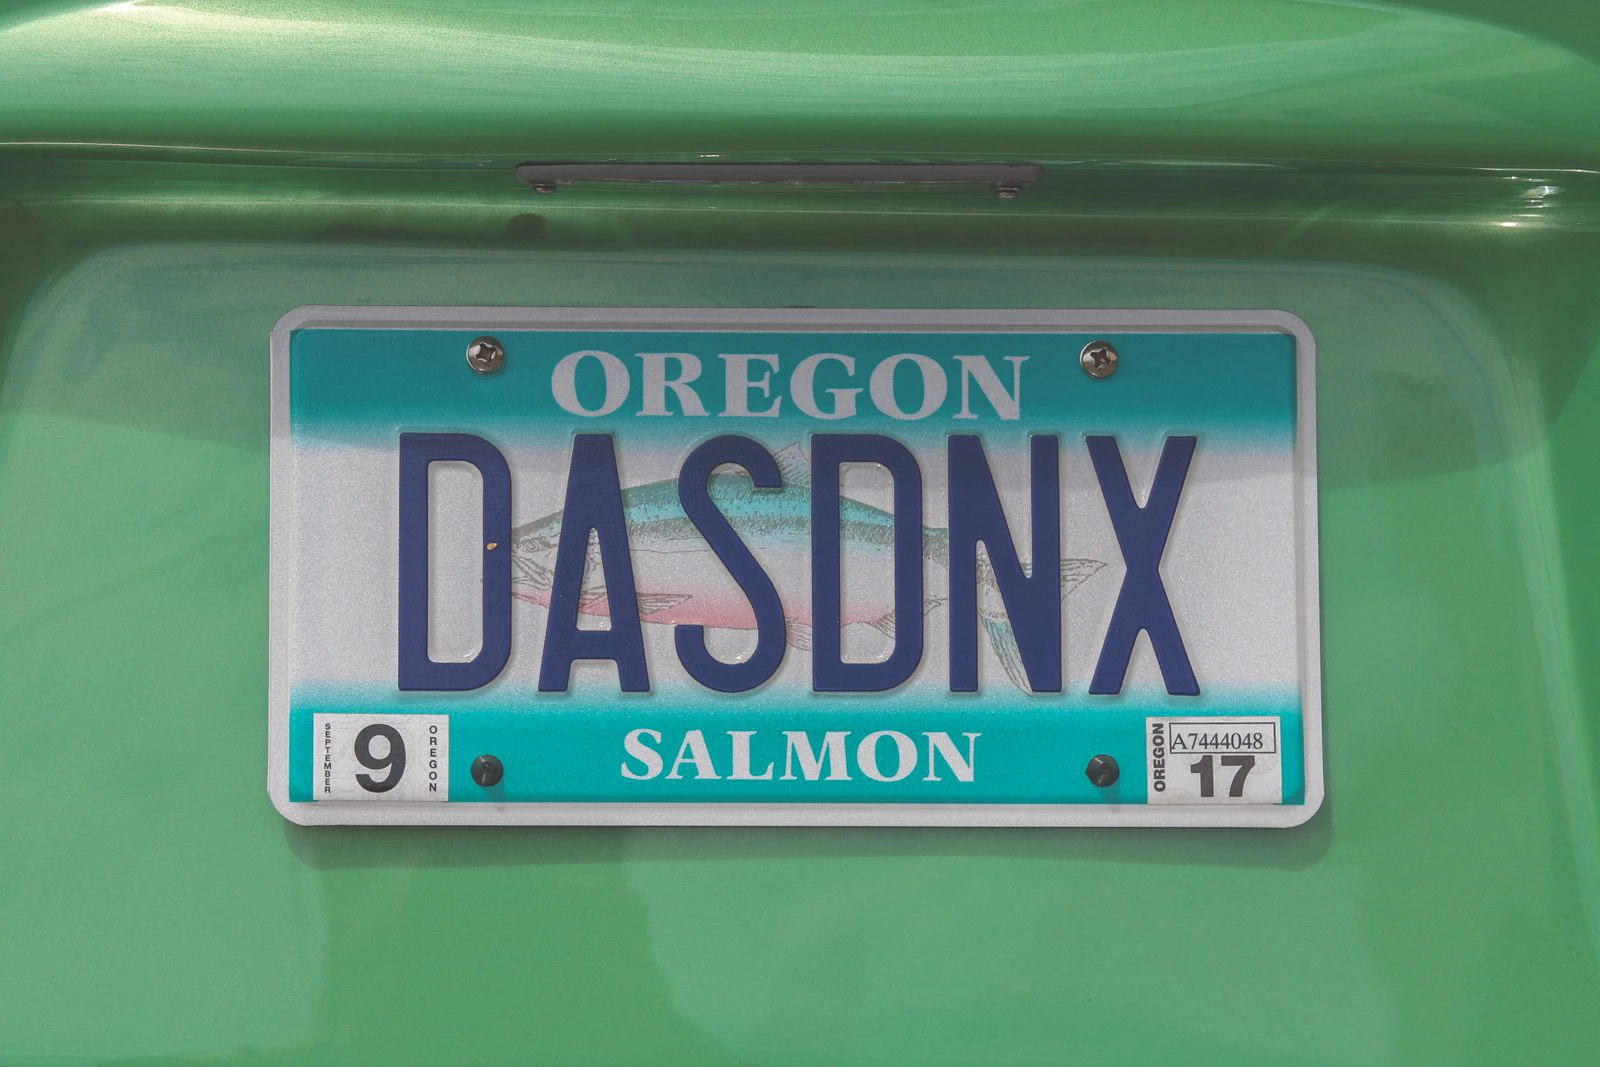 Oregon License plate that says "DASDNX"